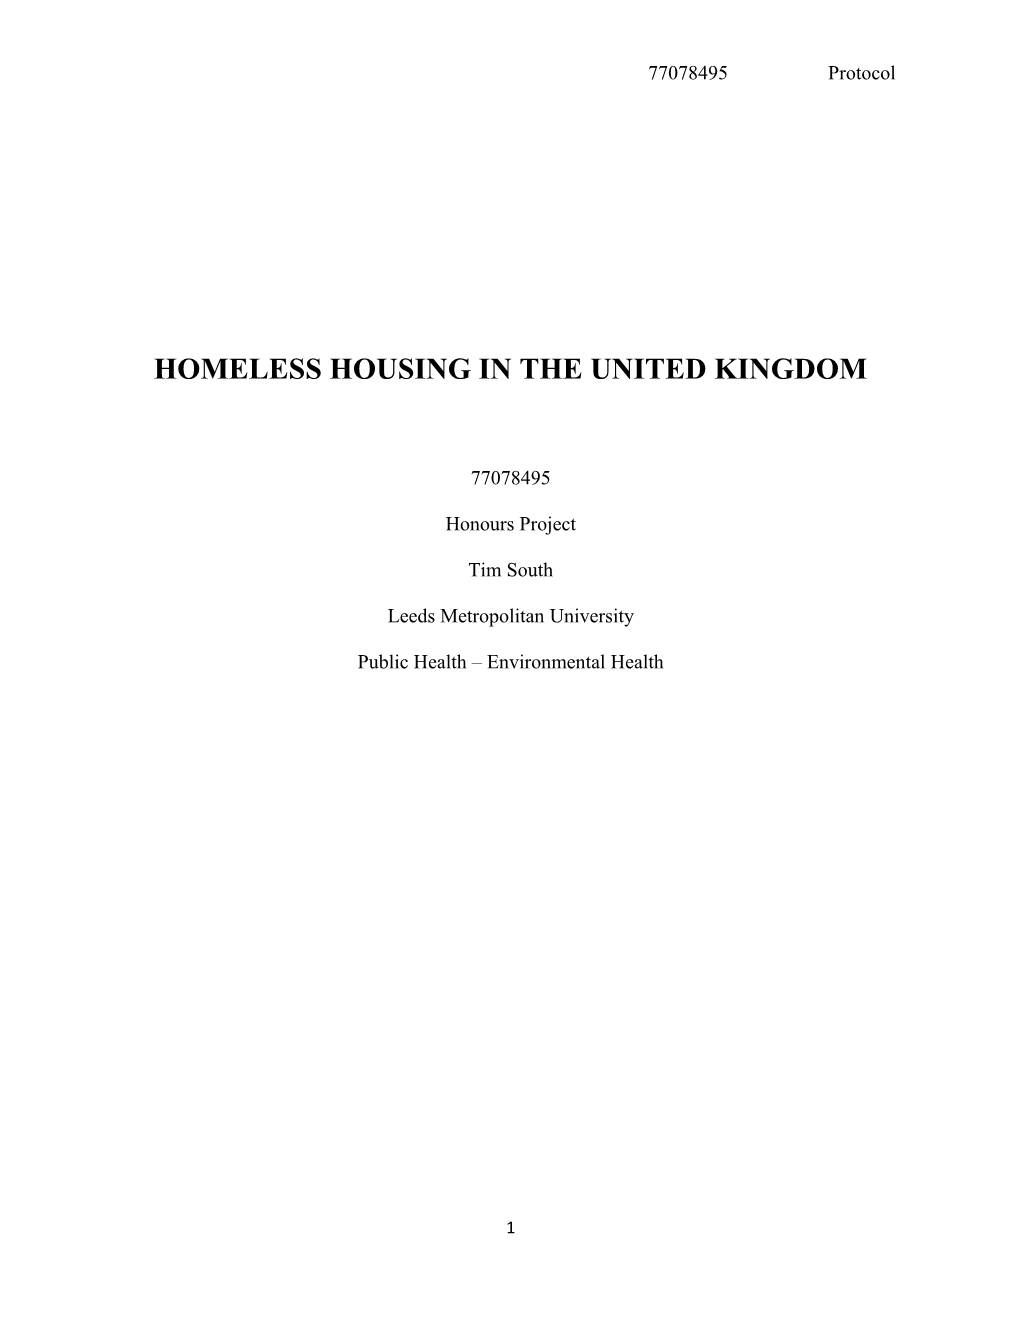 Homeless Housing in the United Kingdom